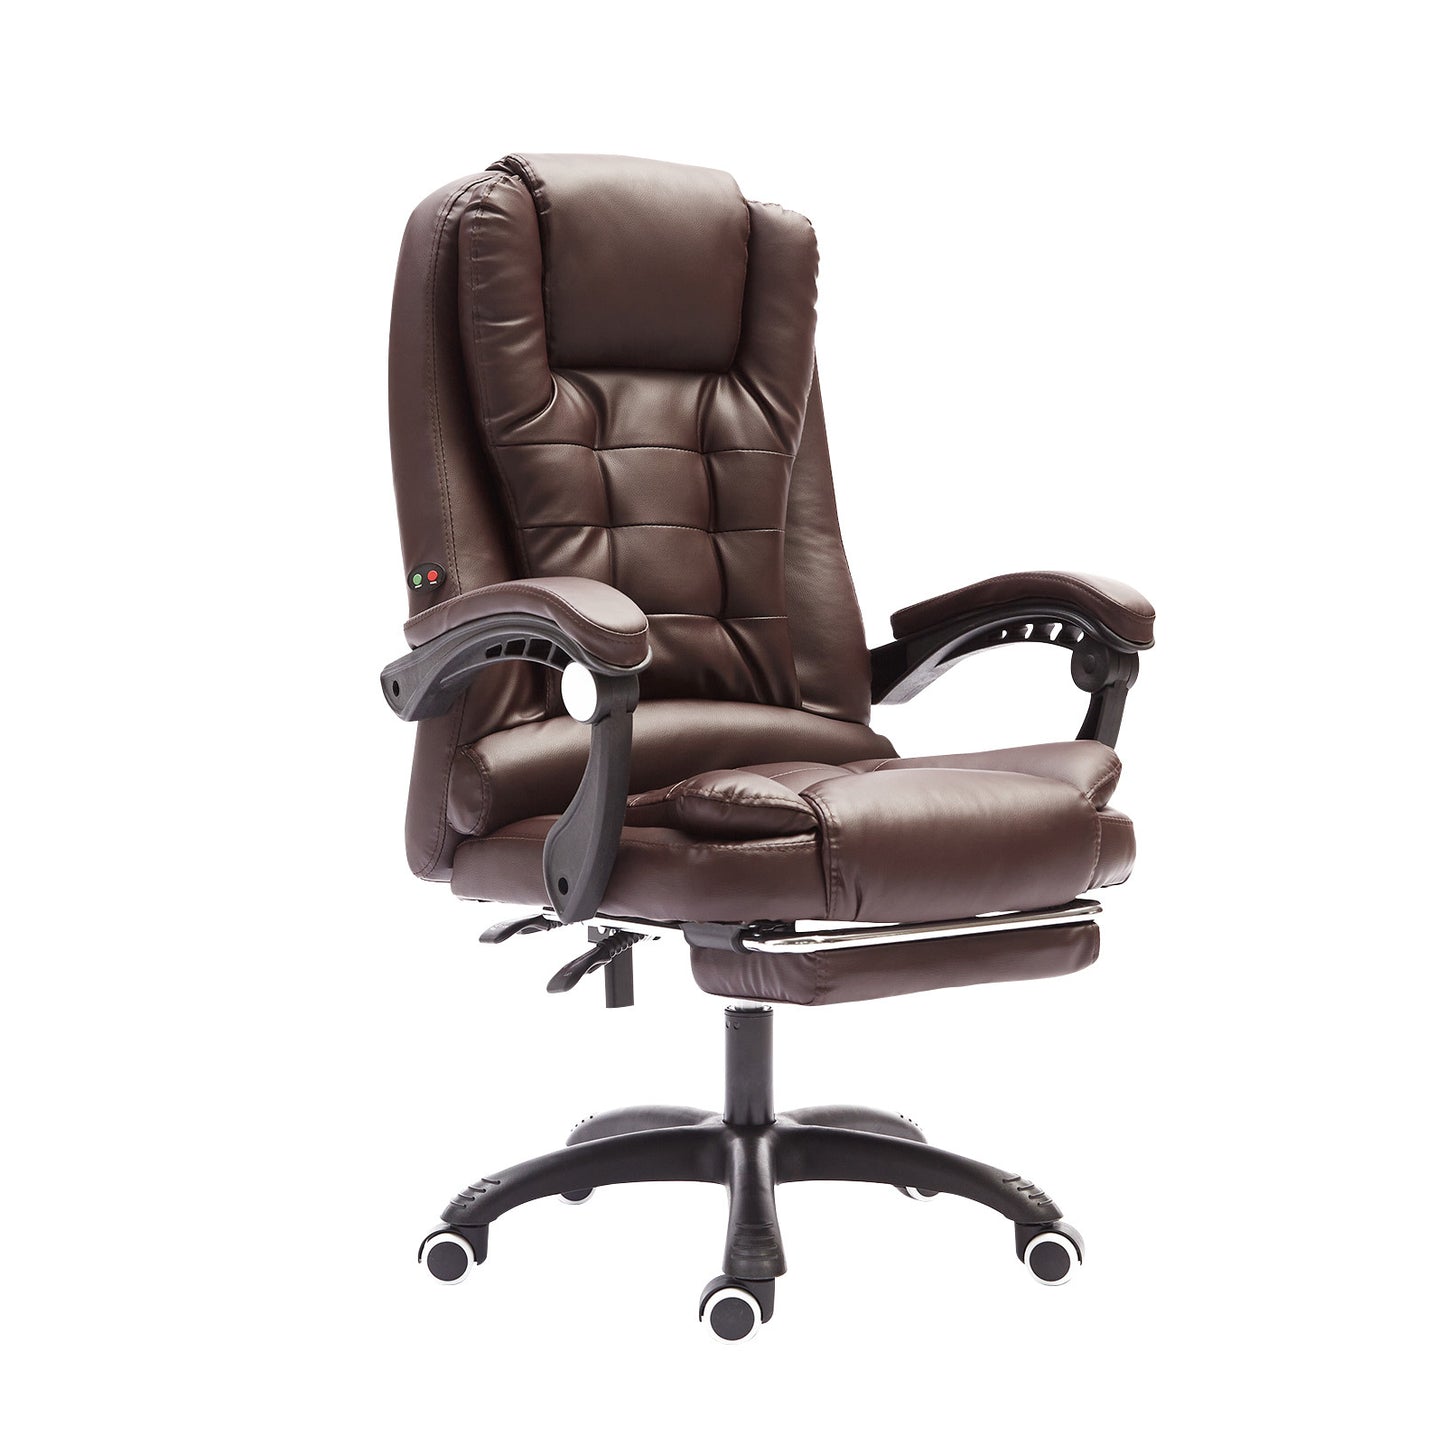 La Bella Massage Office Chair Footrest Ergonomic Executive Computer Work Gaming - Espresso